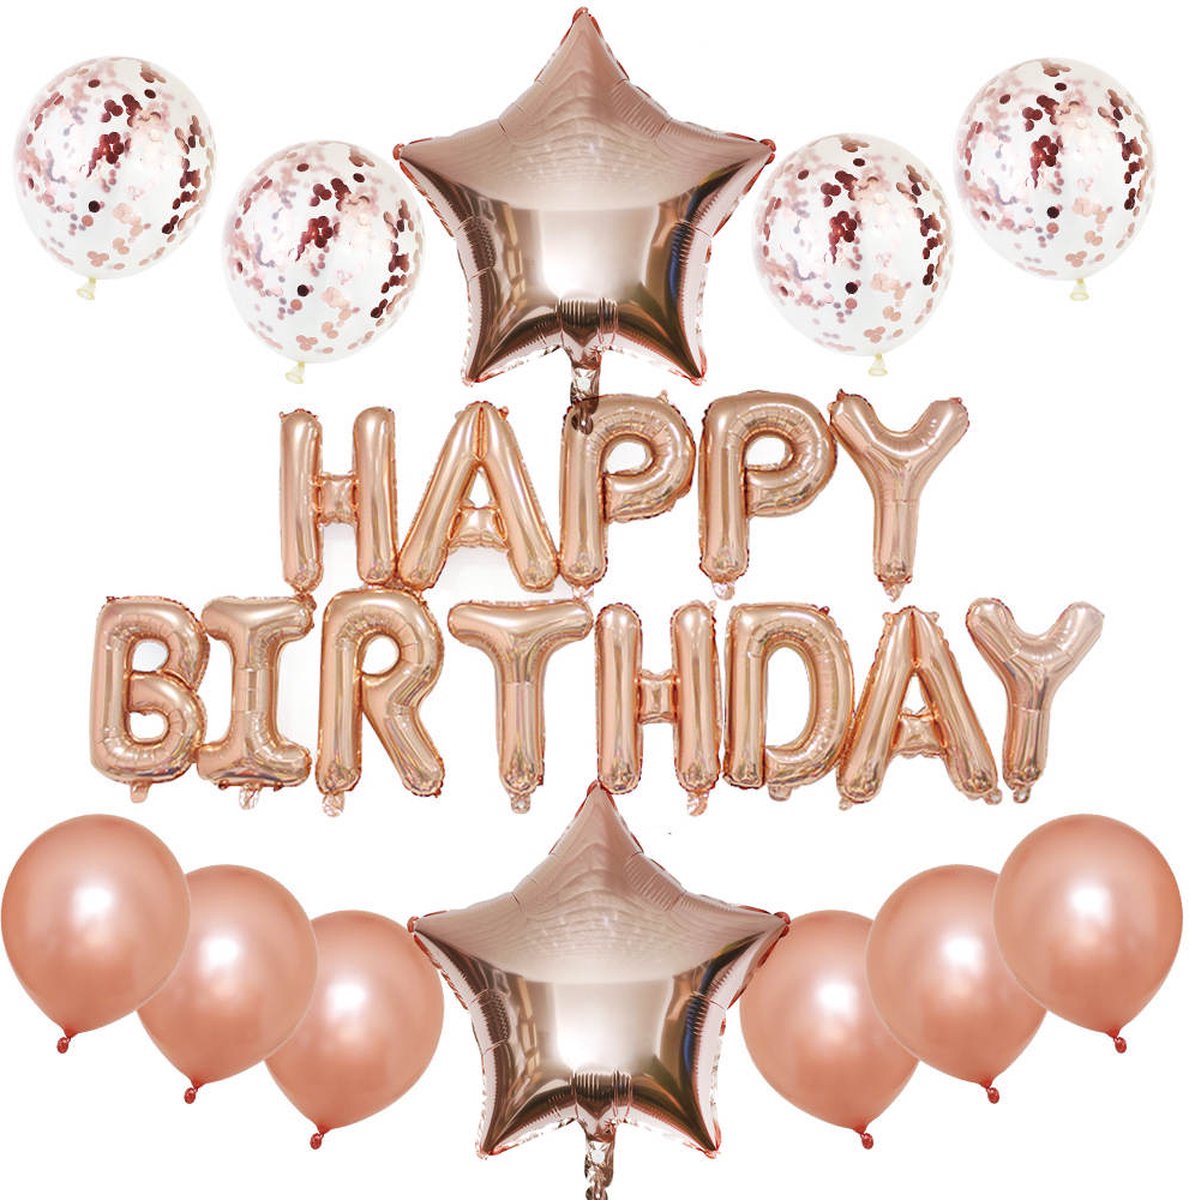 Joya Beauty® Happy Birthday Ballons Party Set Zwart